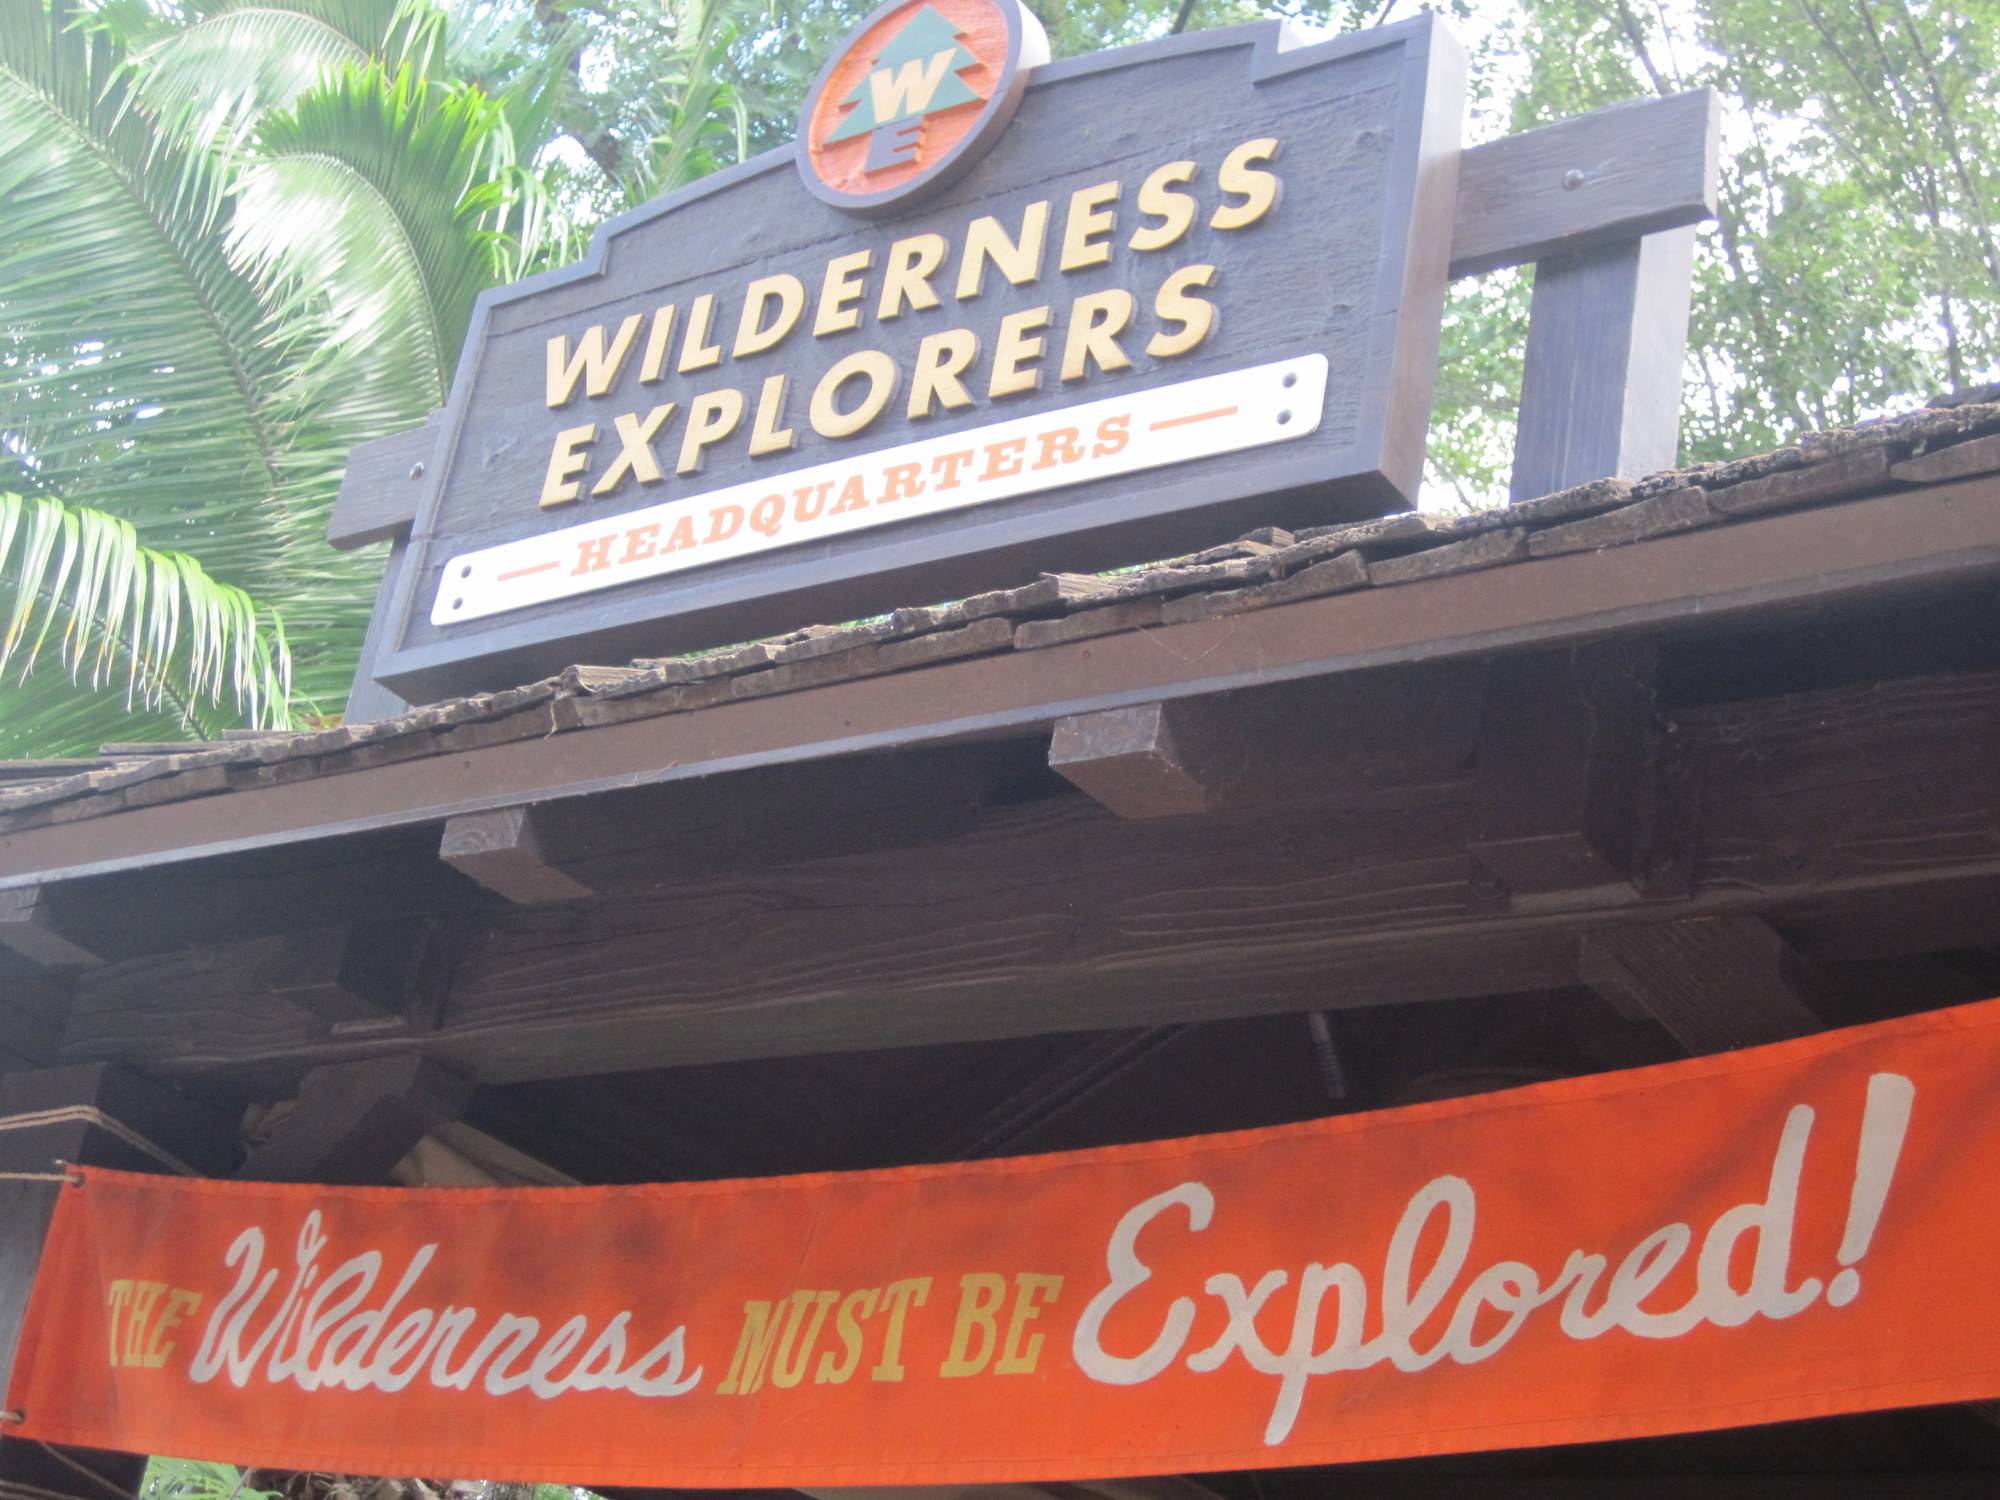 Animal Kingdom Wilderness Explorers Headquarters